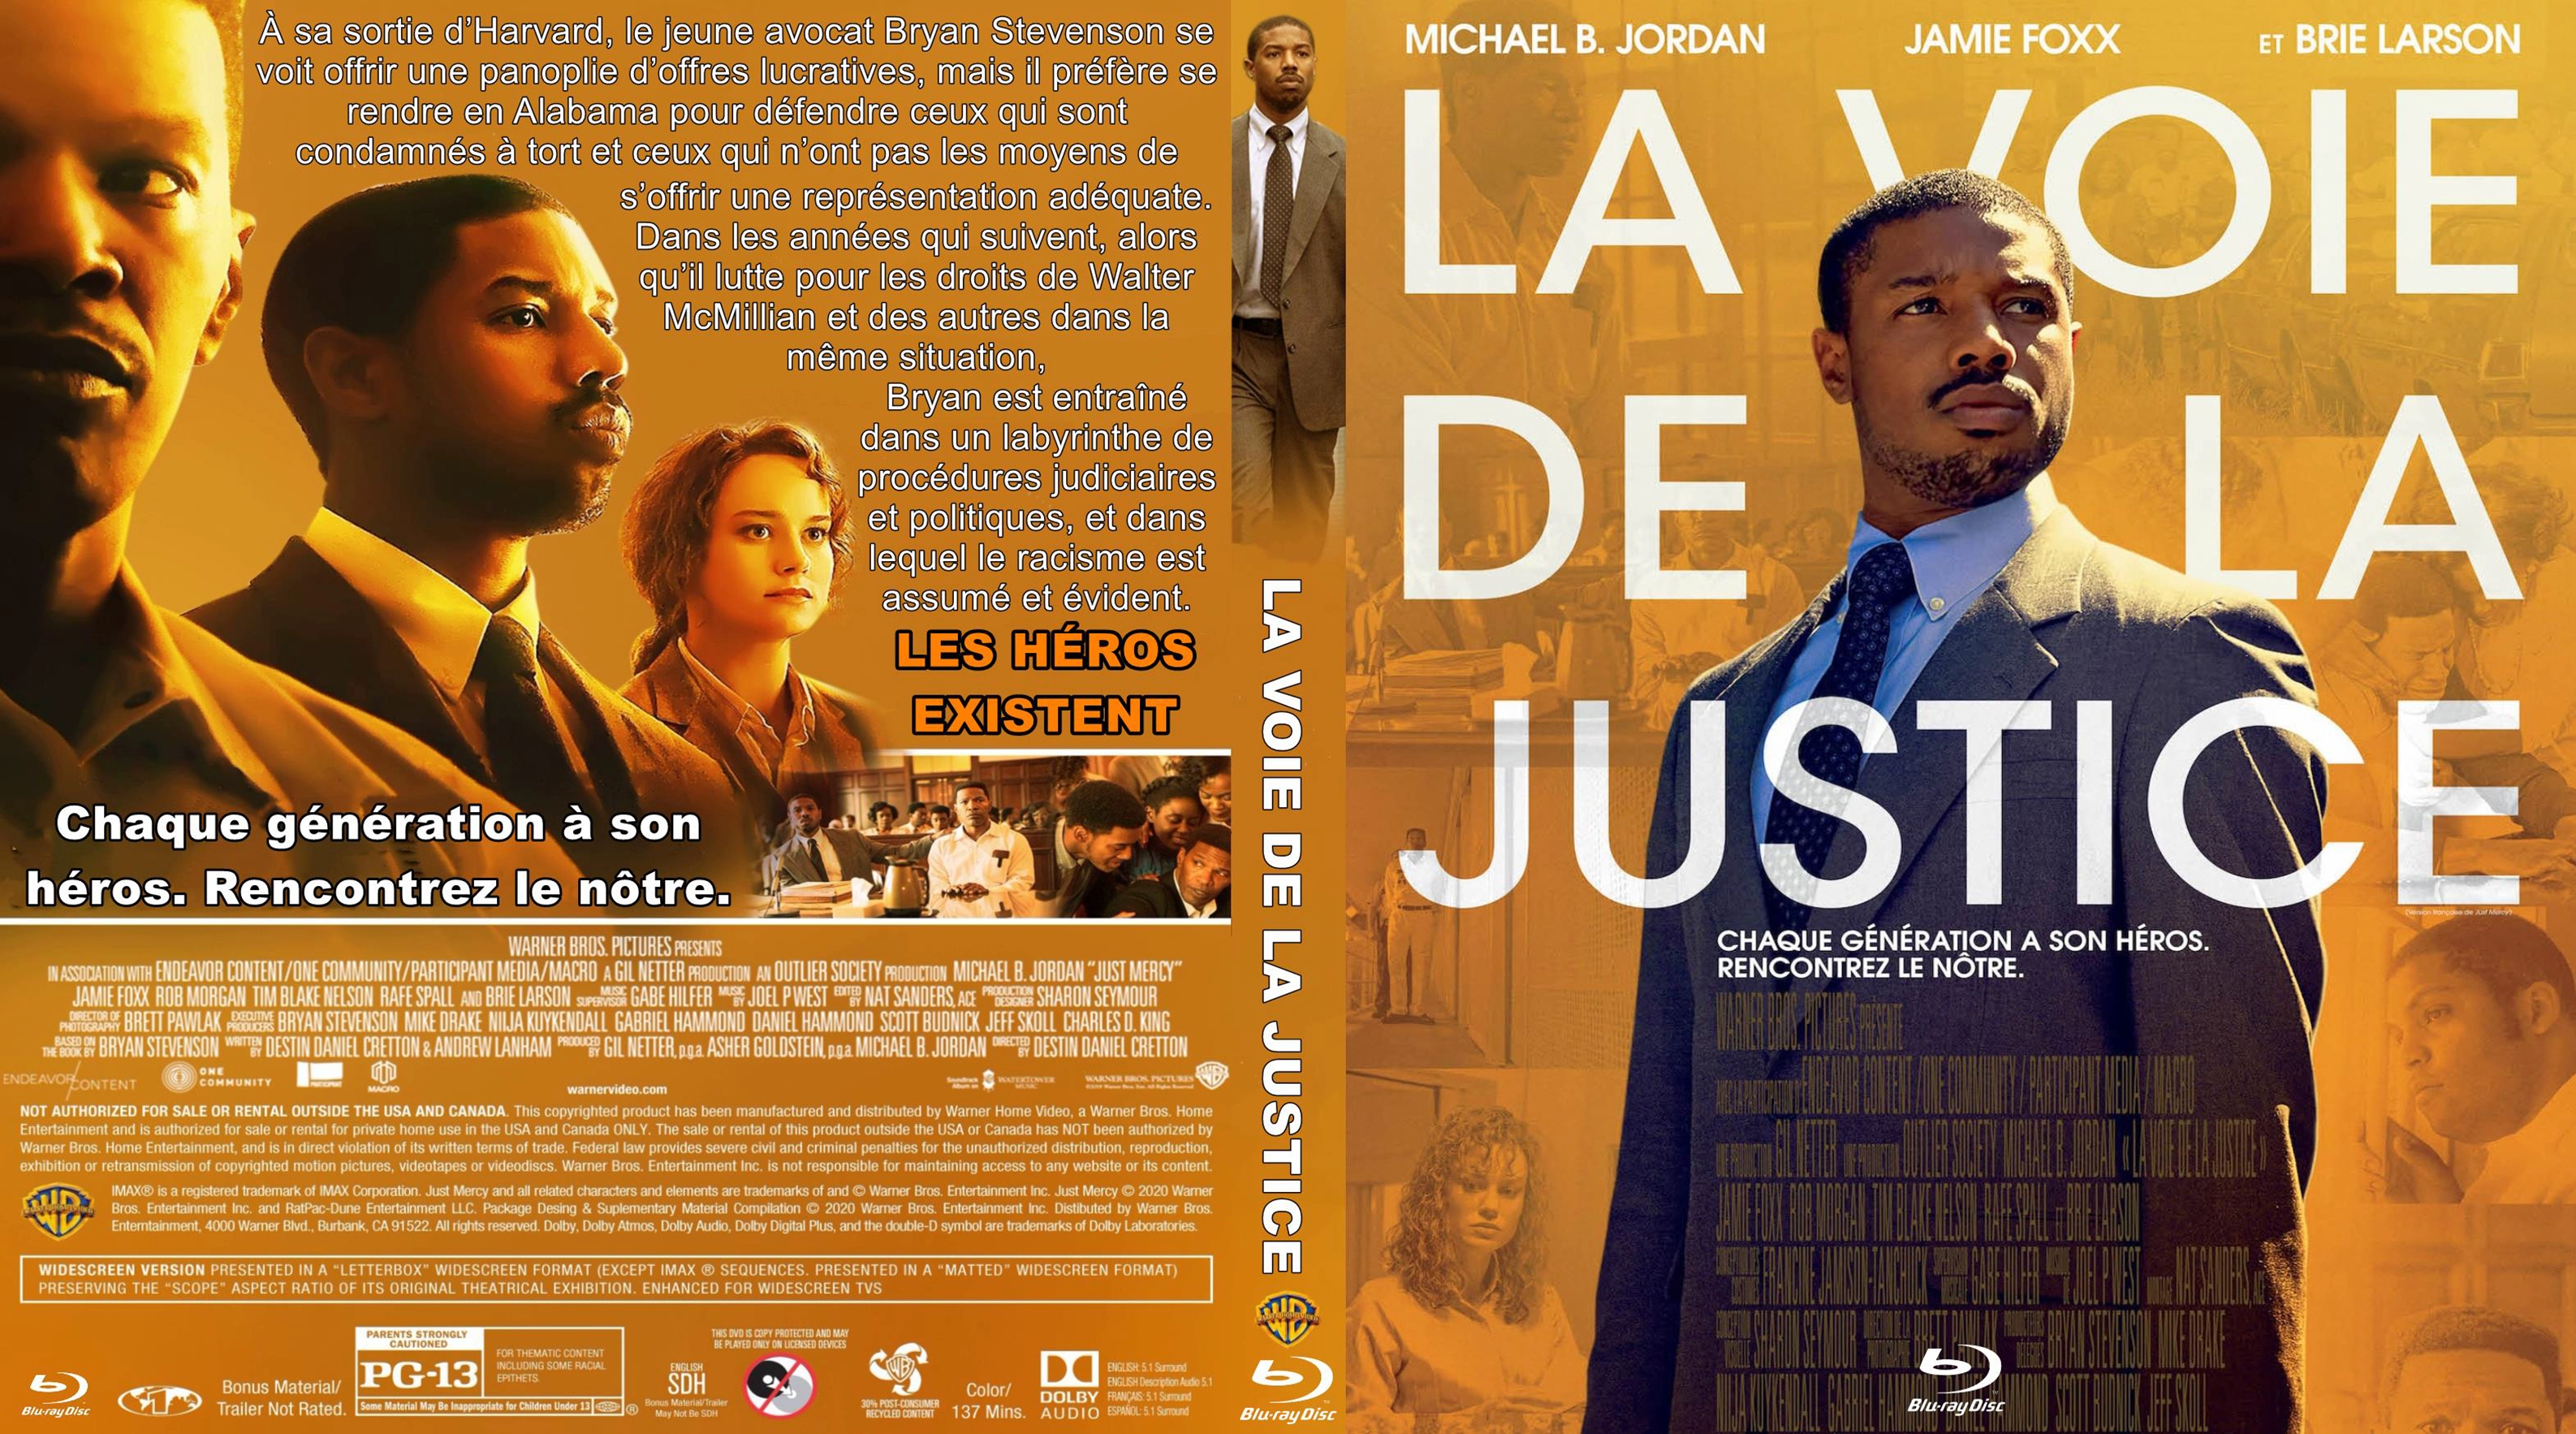 Jaquette DVD La voie de la justice custom (BLU-RAY)